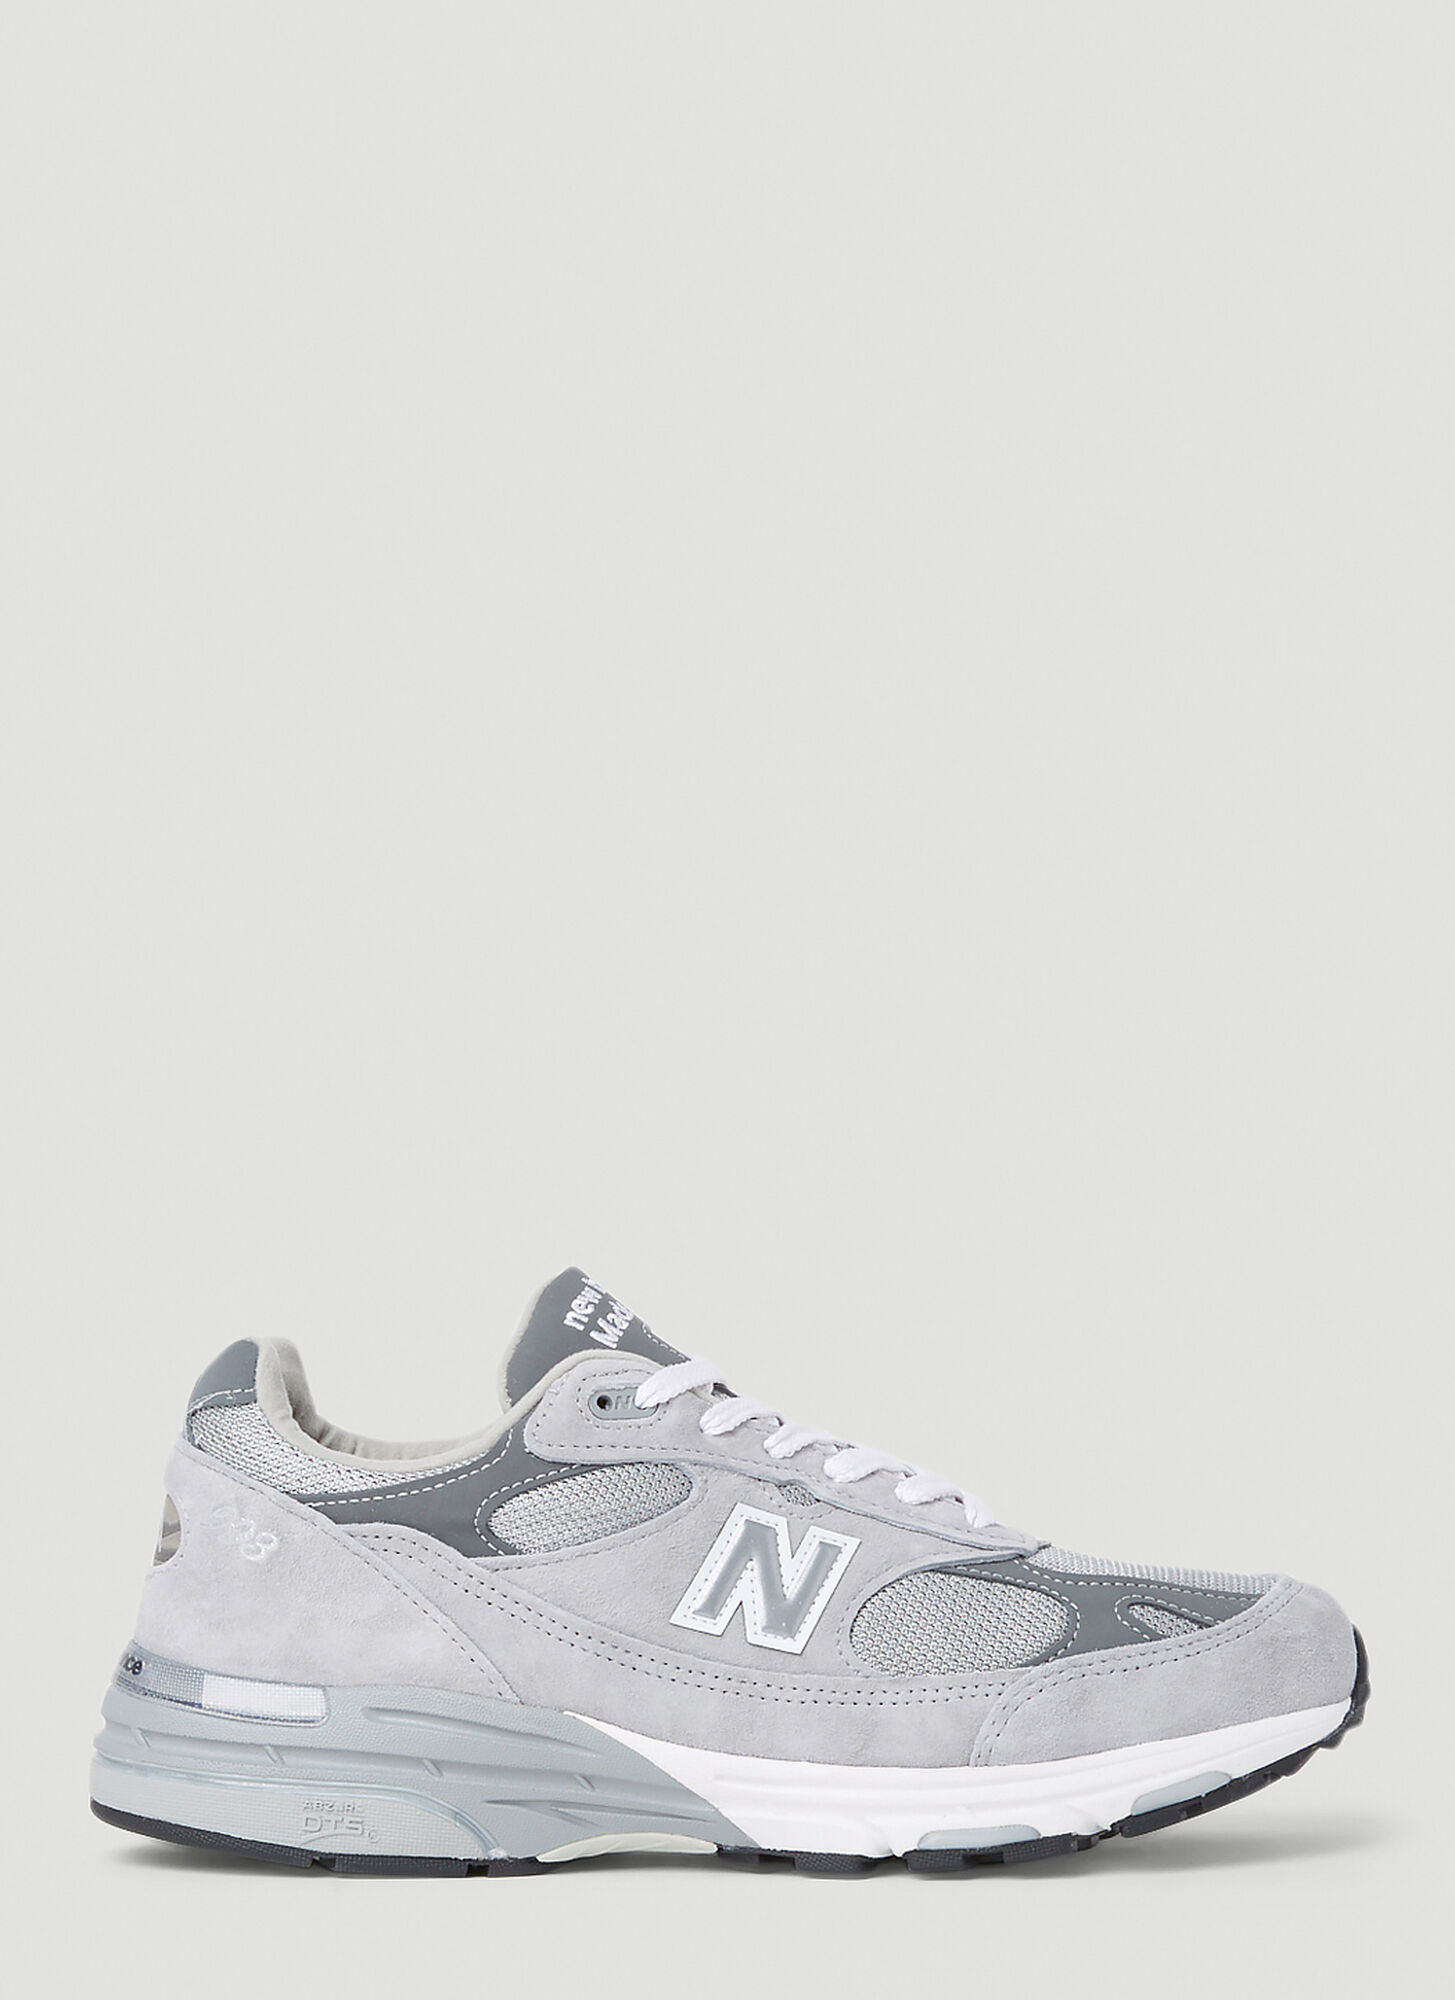 New Balance 993 Sneakers Unisex Greyunisex